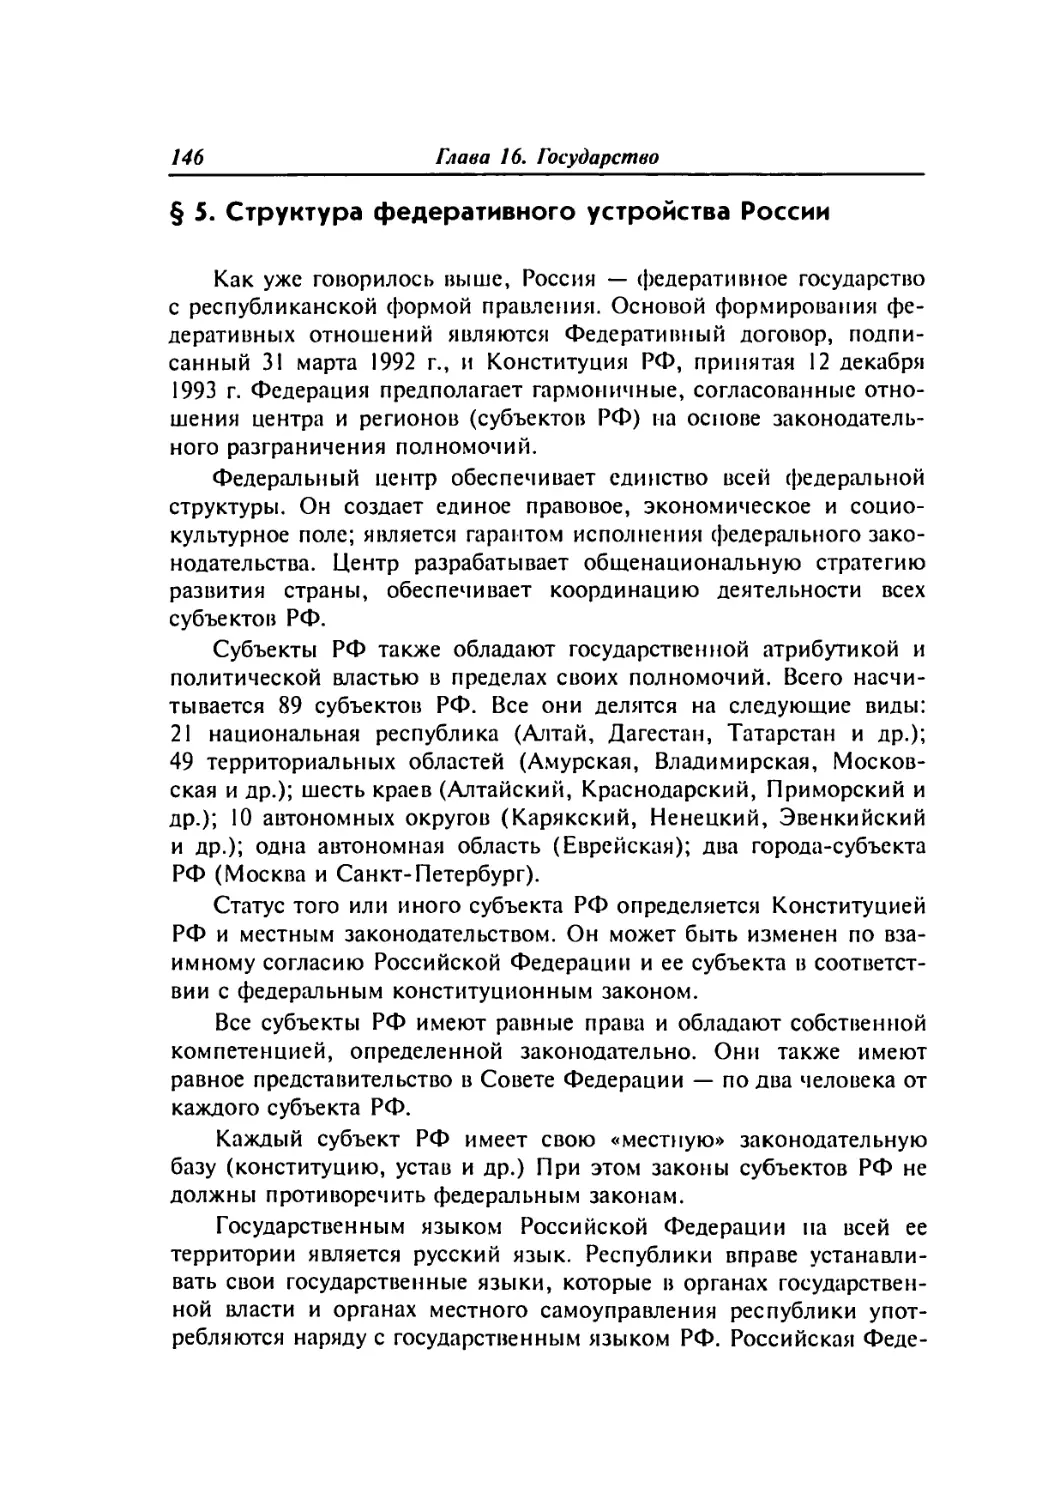 § 5. Структура федеративного устройства России